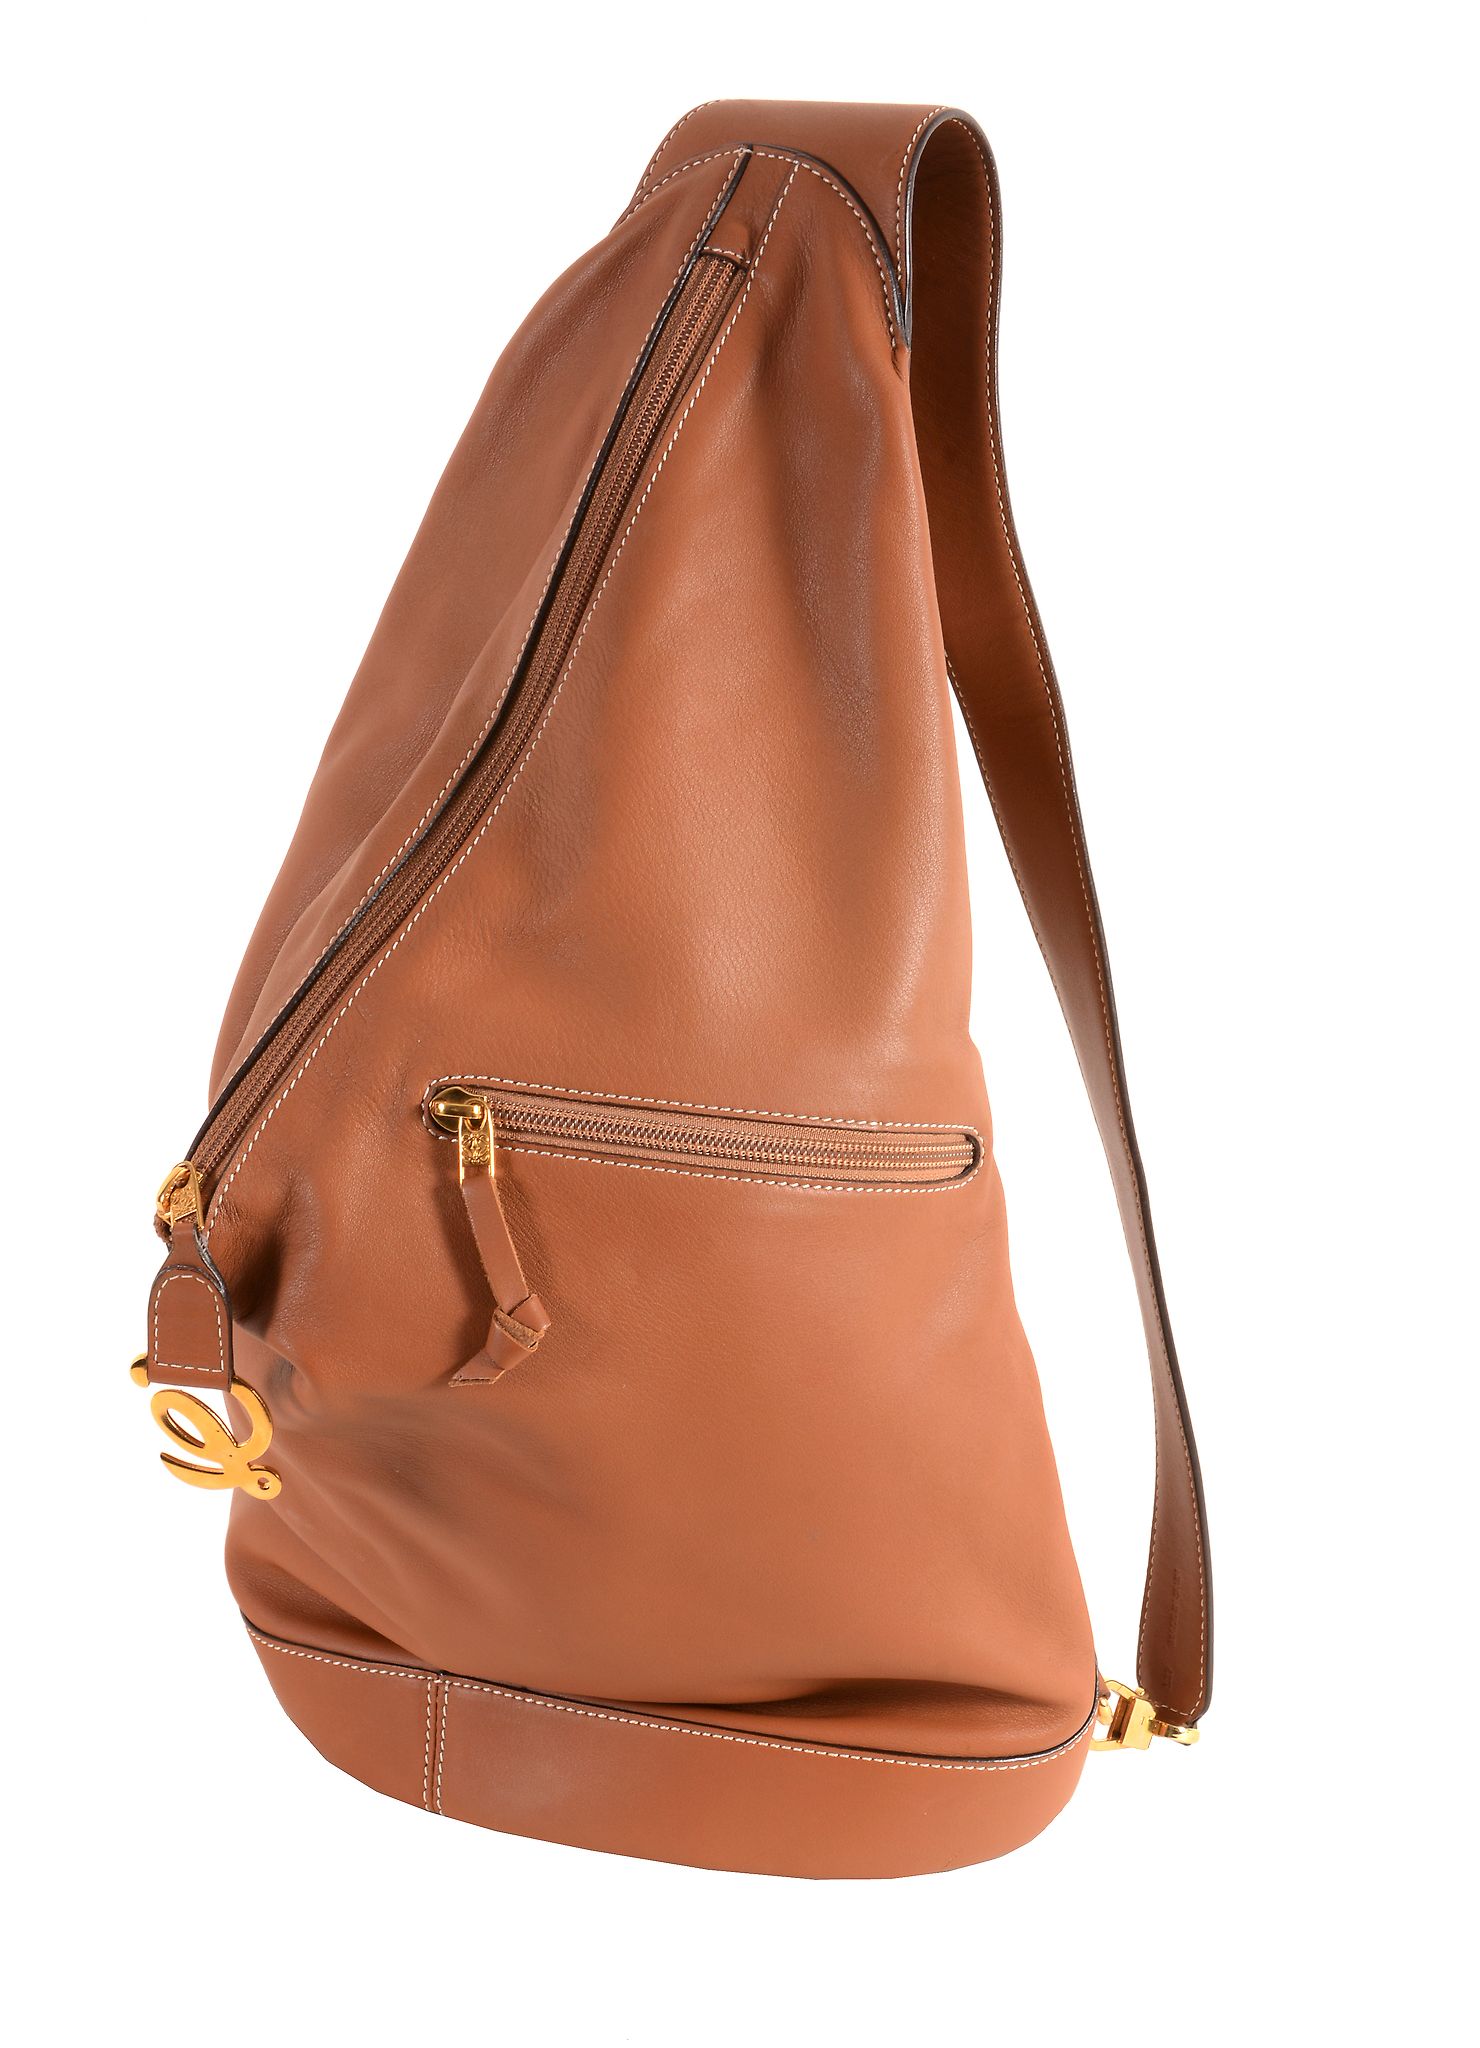 Loewe, Flamenco 36, a mink coloured leather handbag  Loewe, Flamenco 36, a mink coloured leather - Image 3 of 4